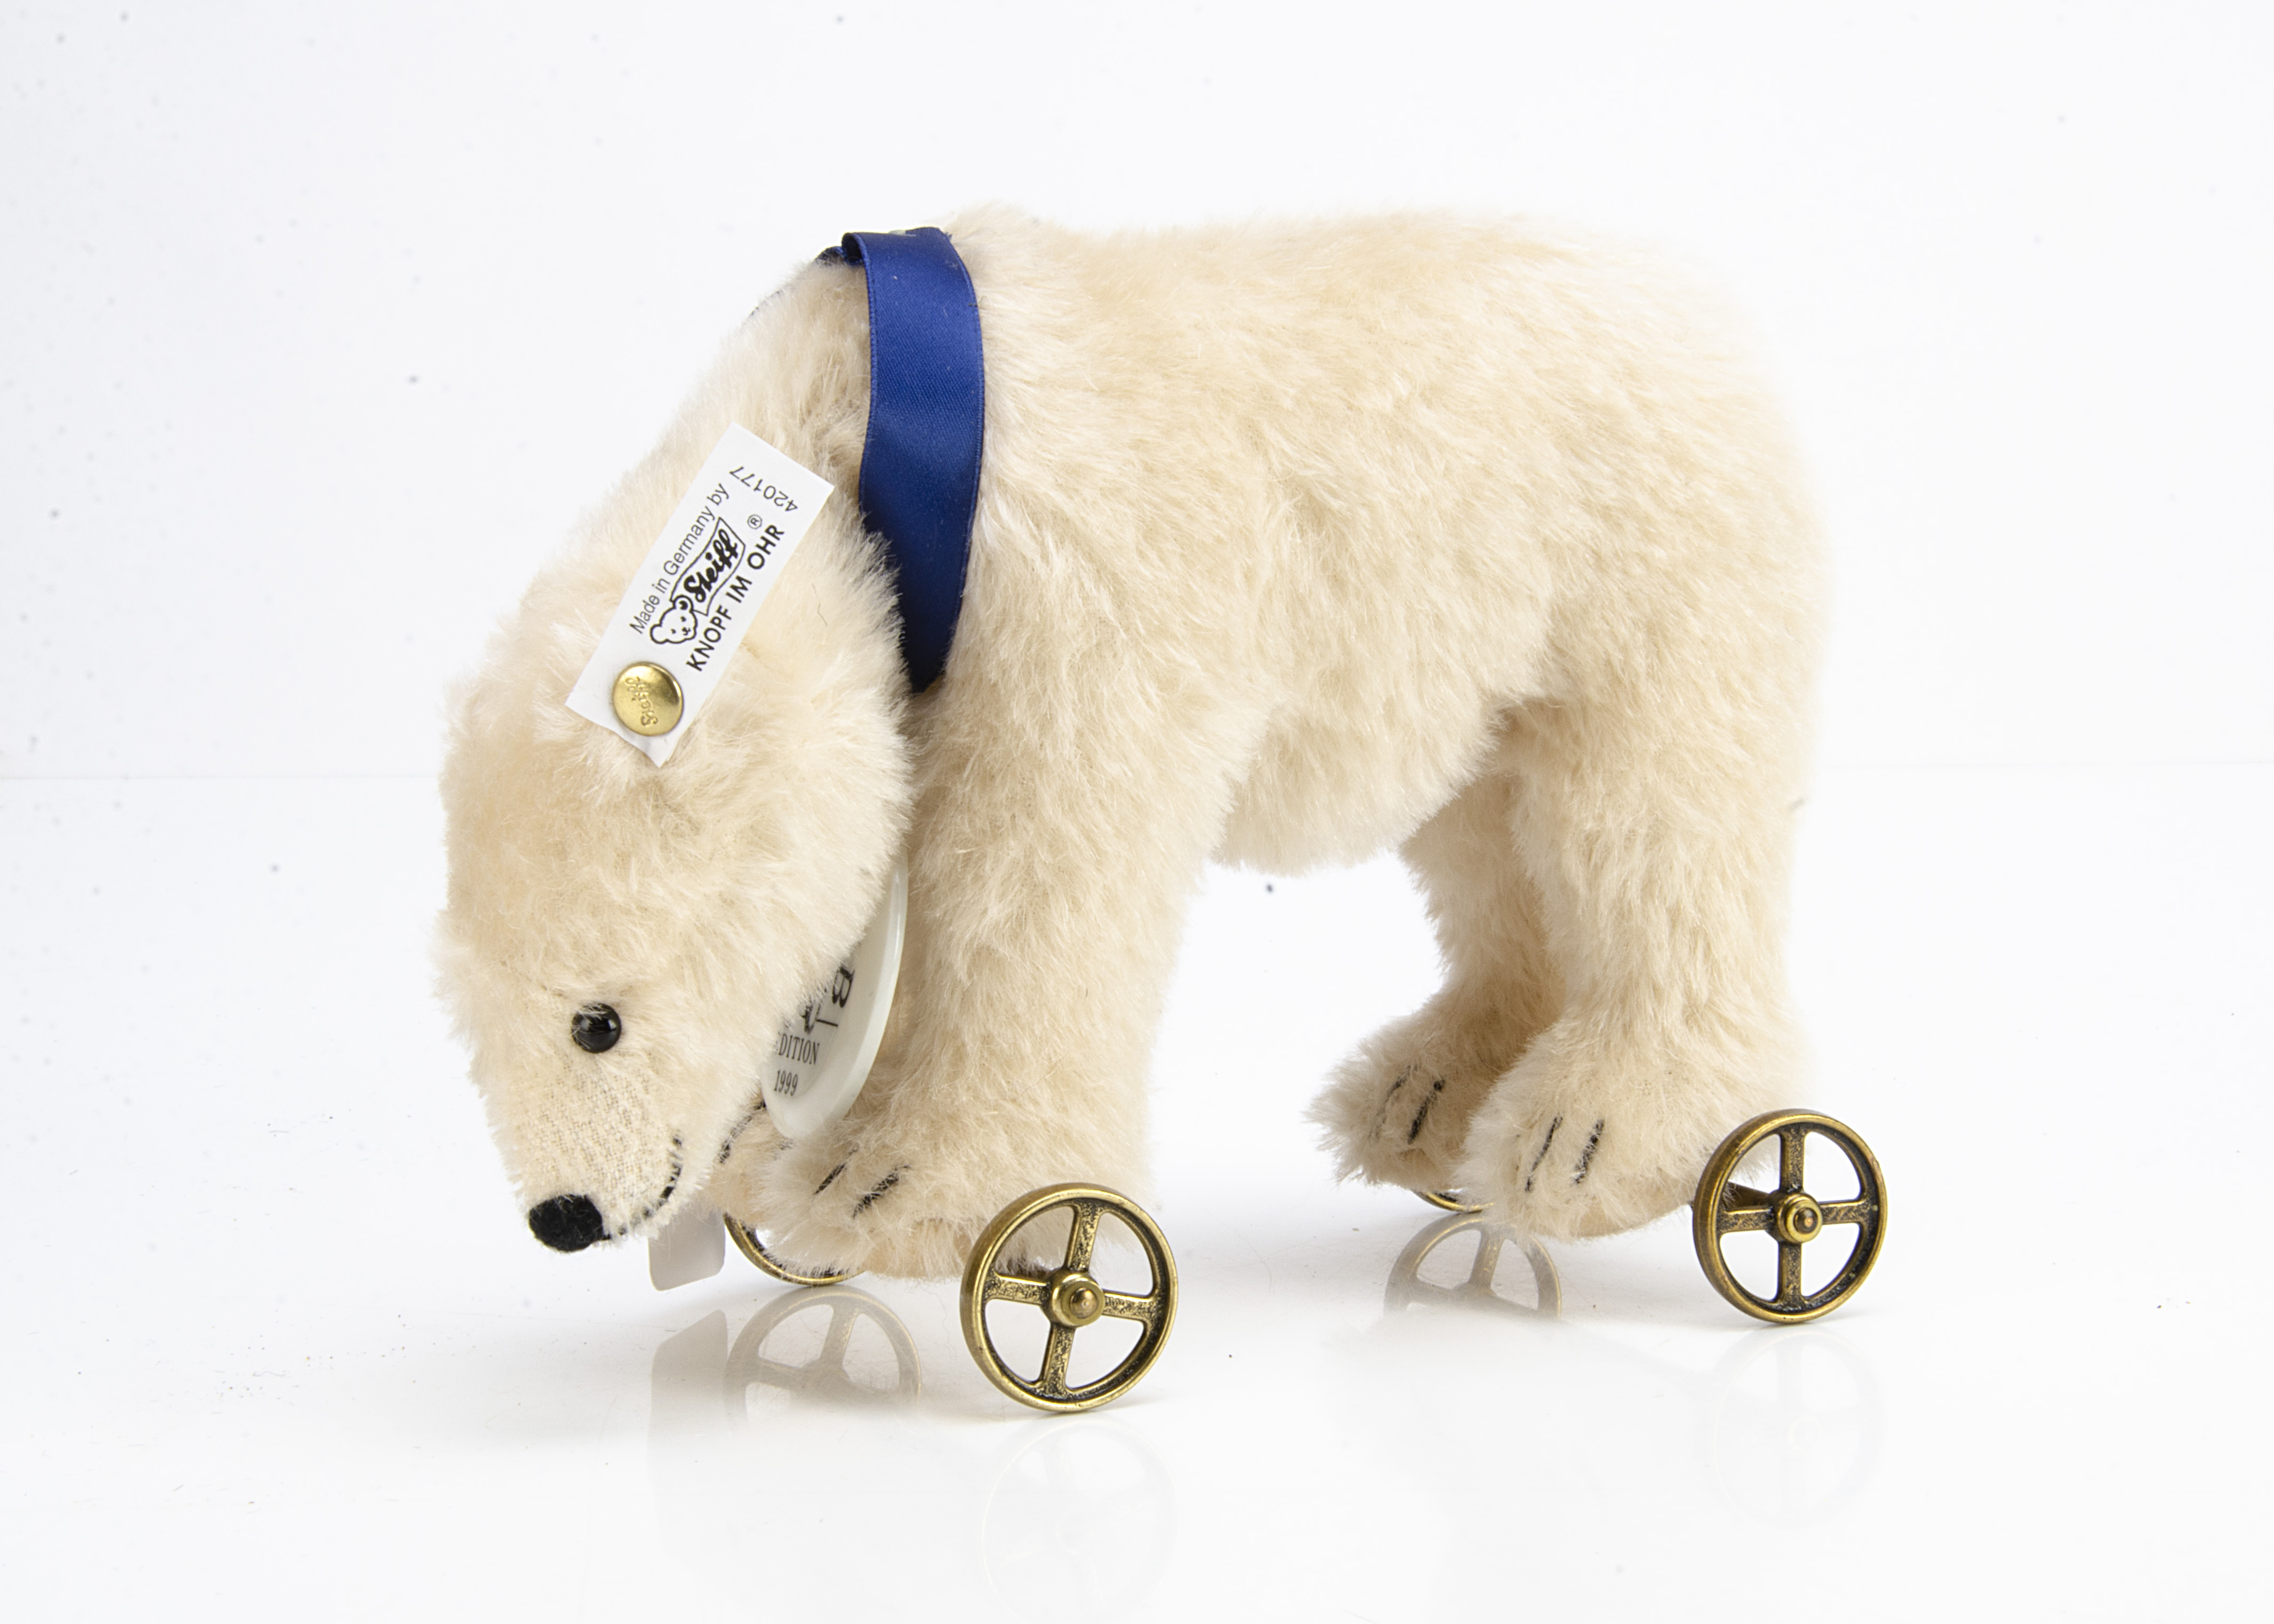 A Steiff limited Club edition Polar Bear on wheels 1910, 4635 for 1999/2000, in original box with